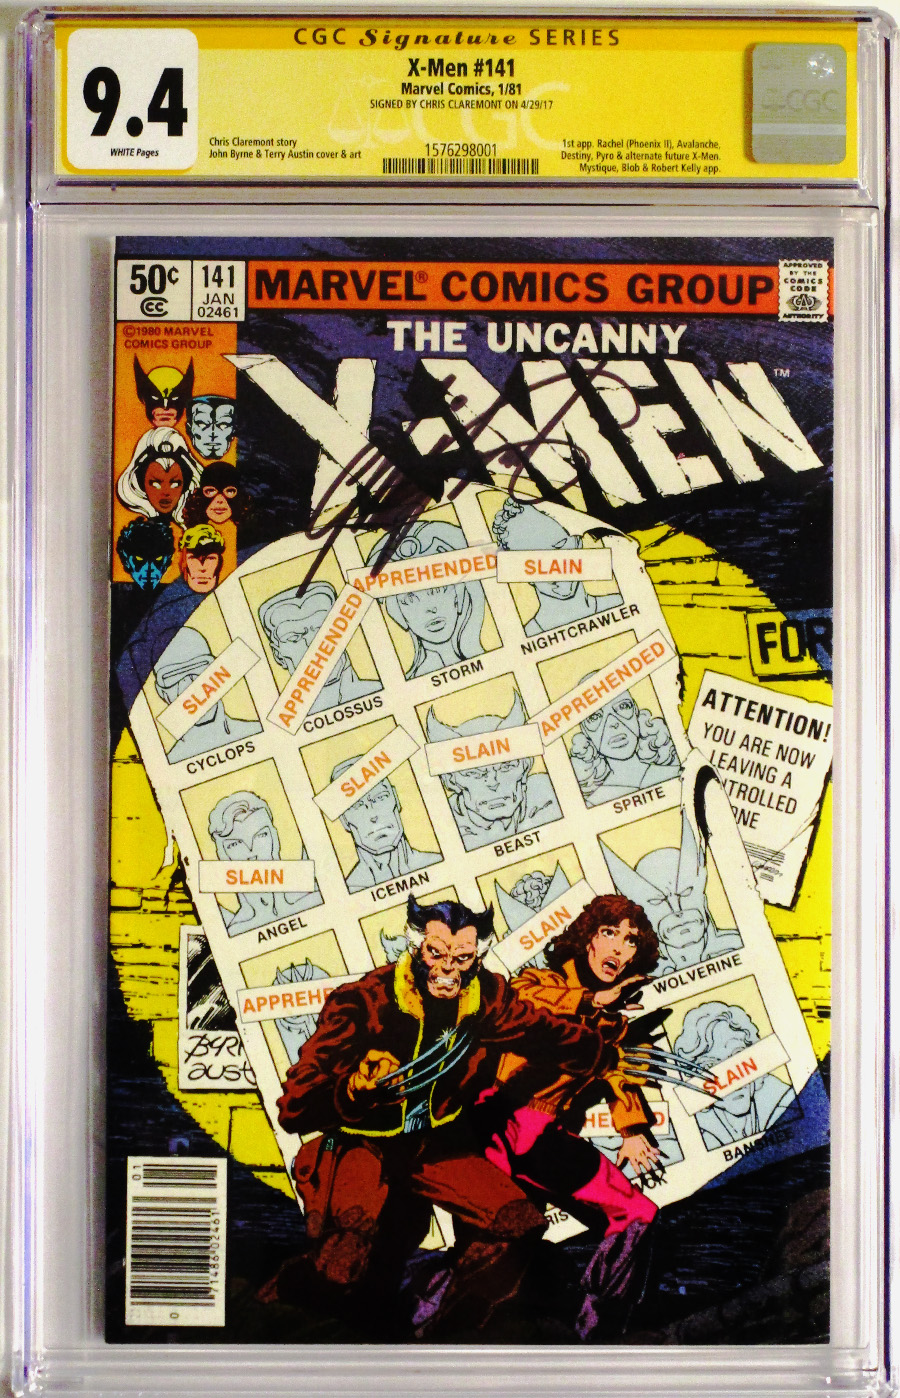 X-Men Vol 1 #141 Cover E CGC Signature Series 9.4 Signed by Chris Claremont